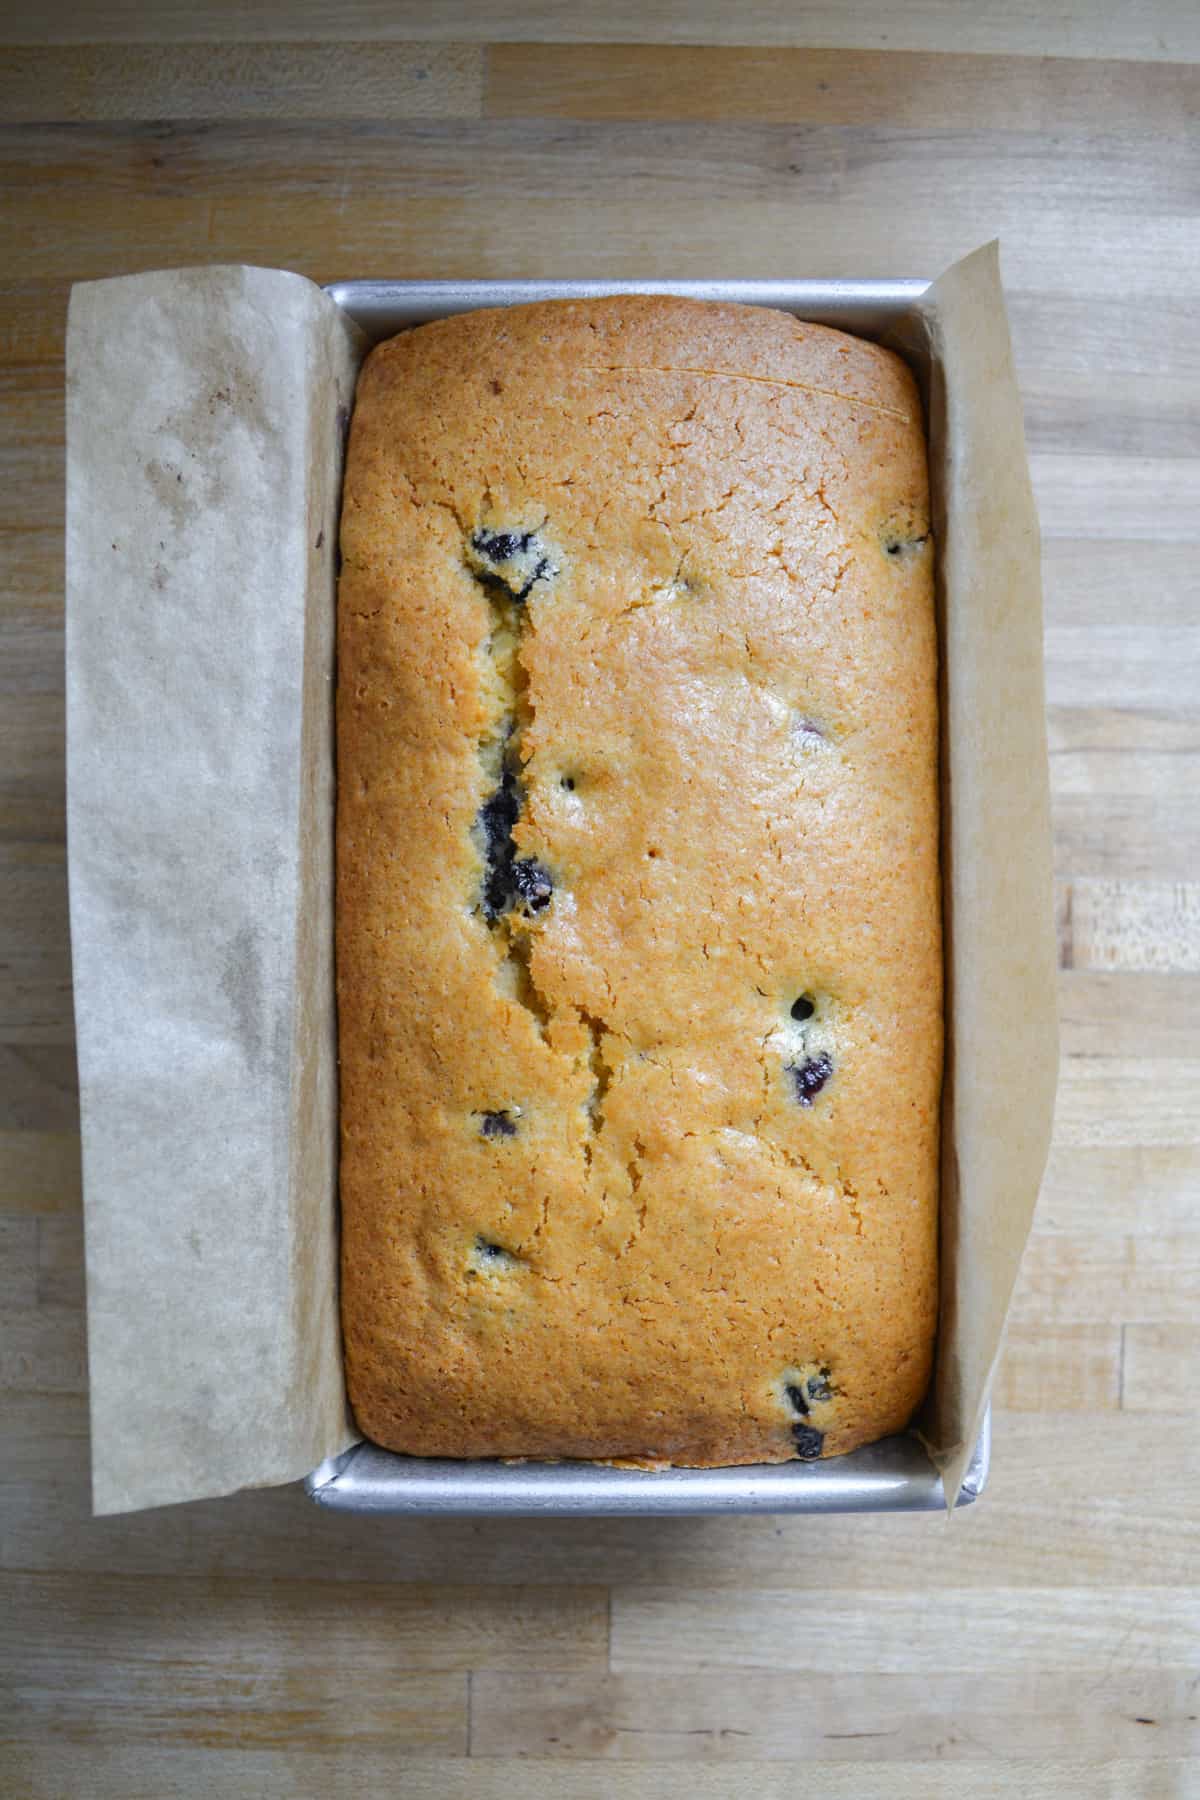 Baked Vegan Blueberry Lemon Cake in the loaf pan.